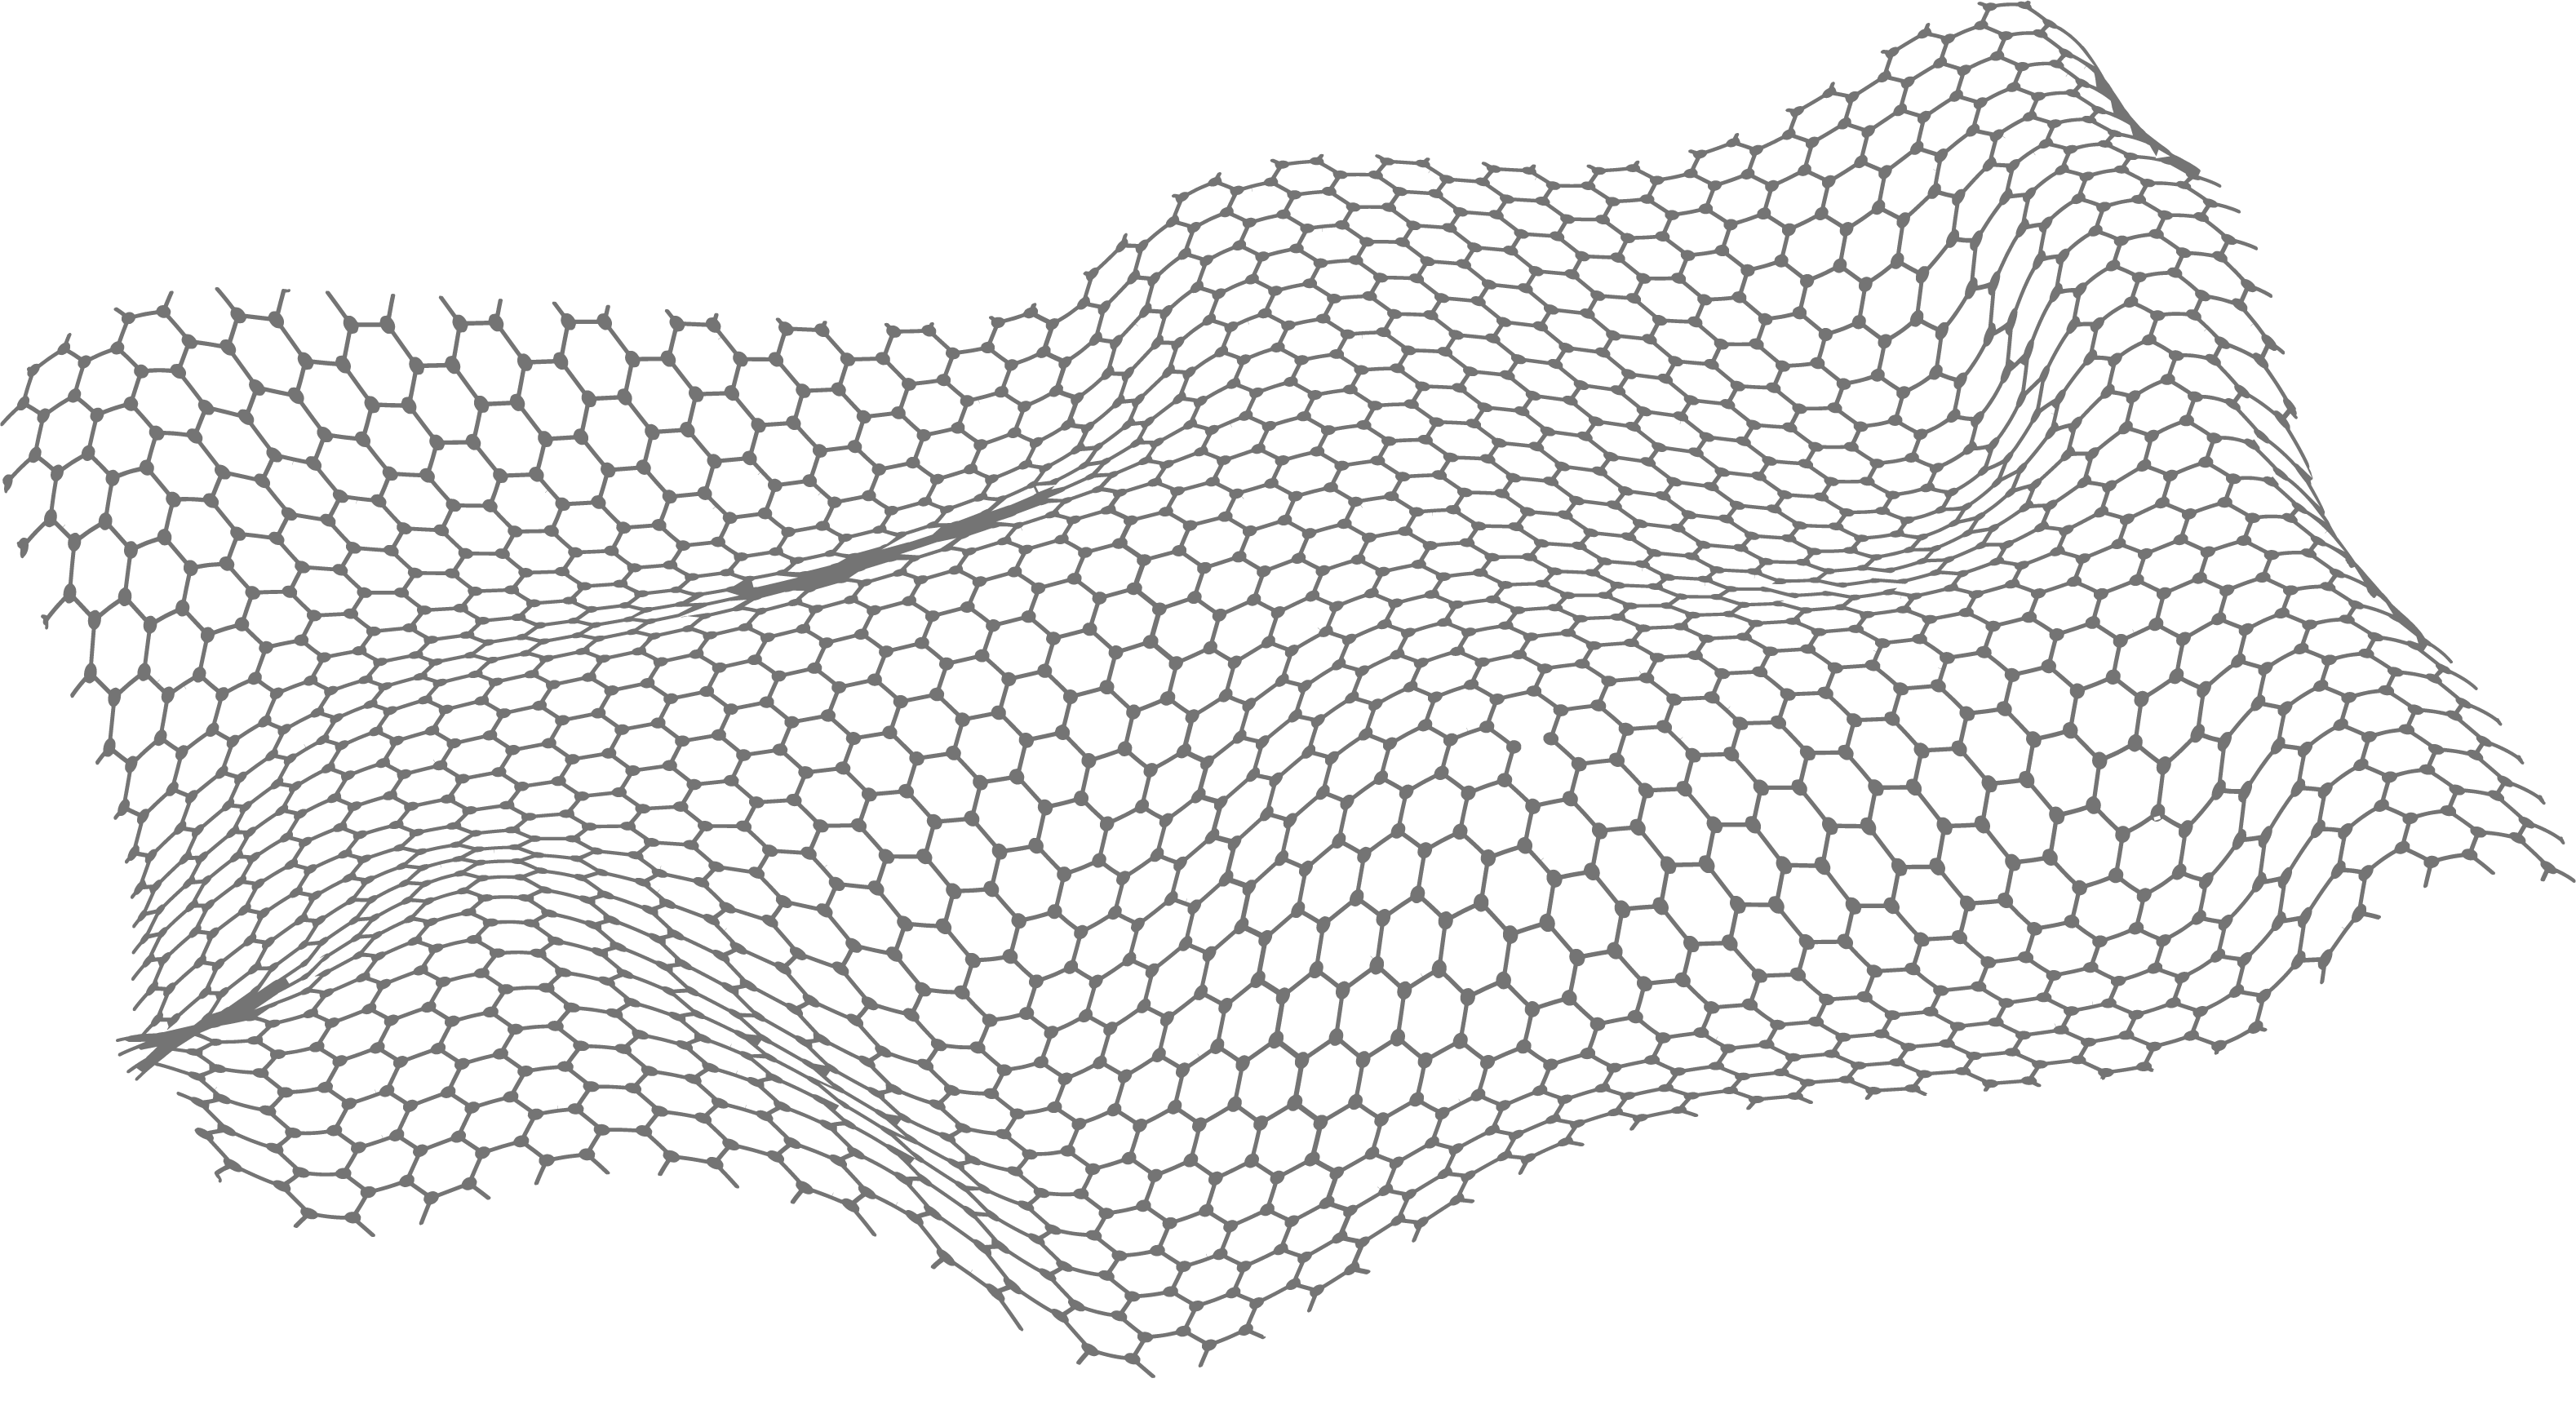 A graphene lattice